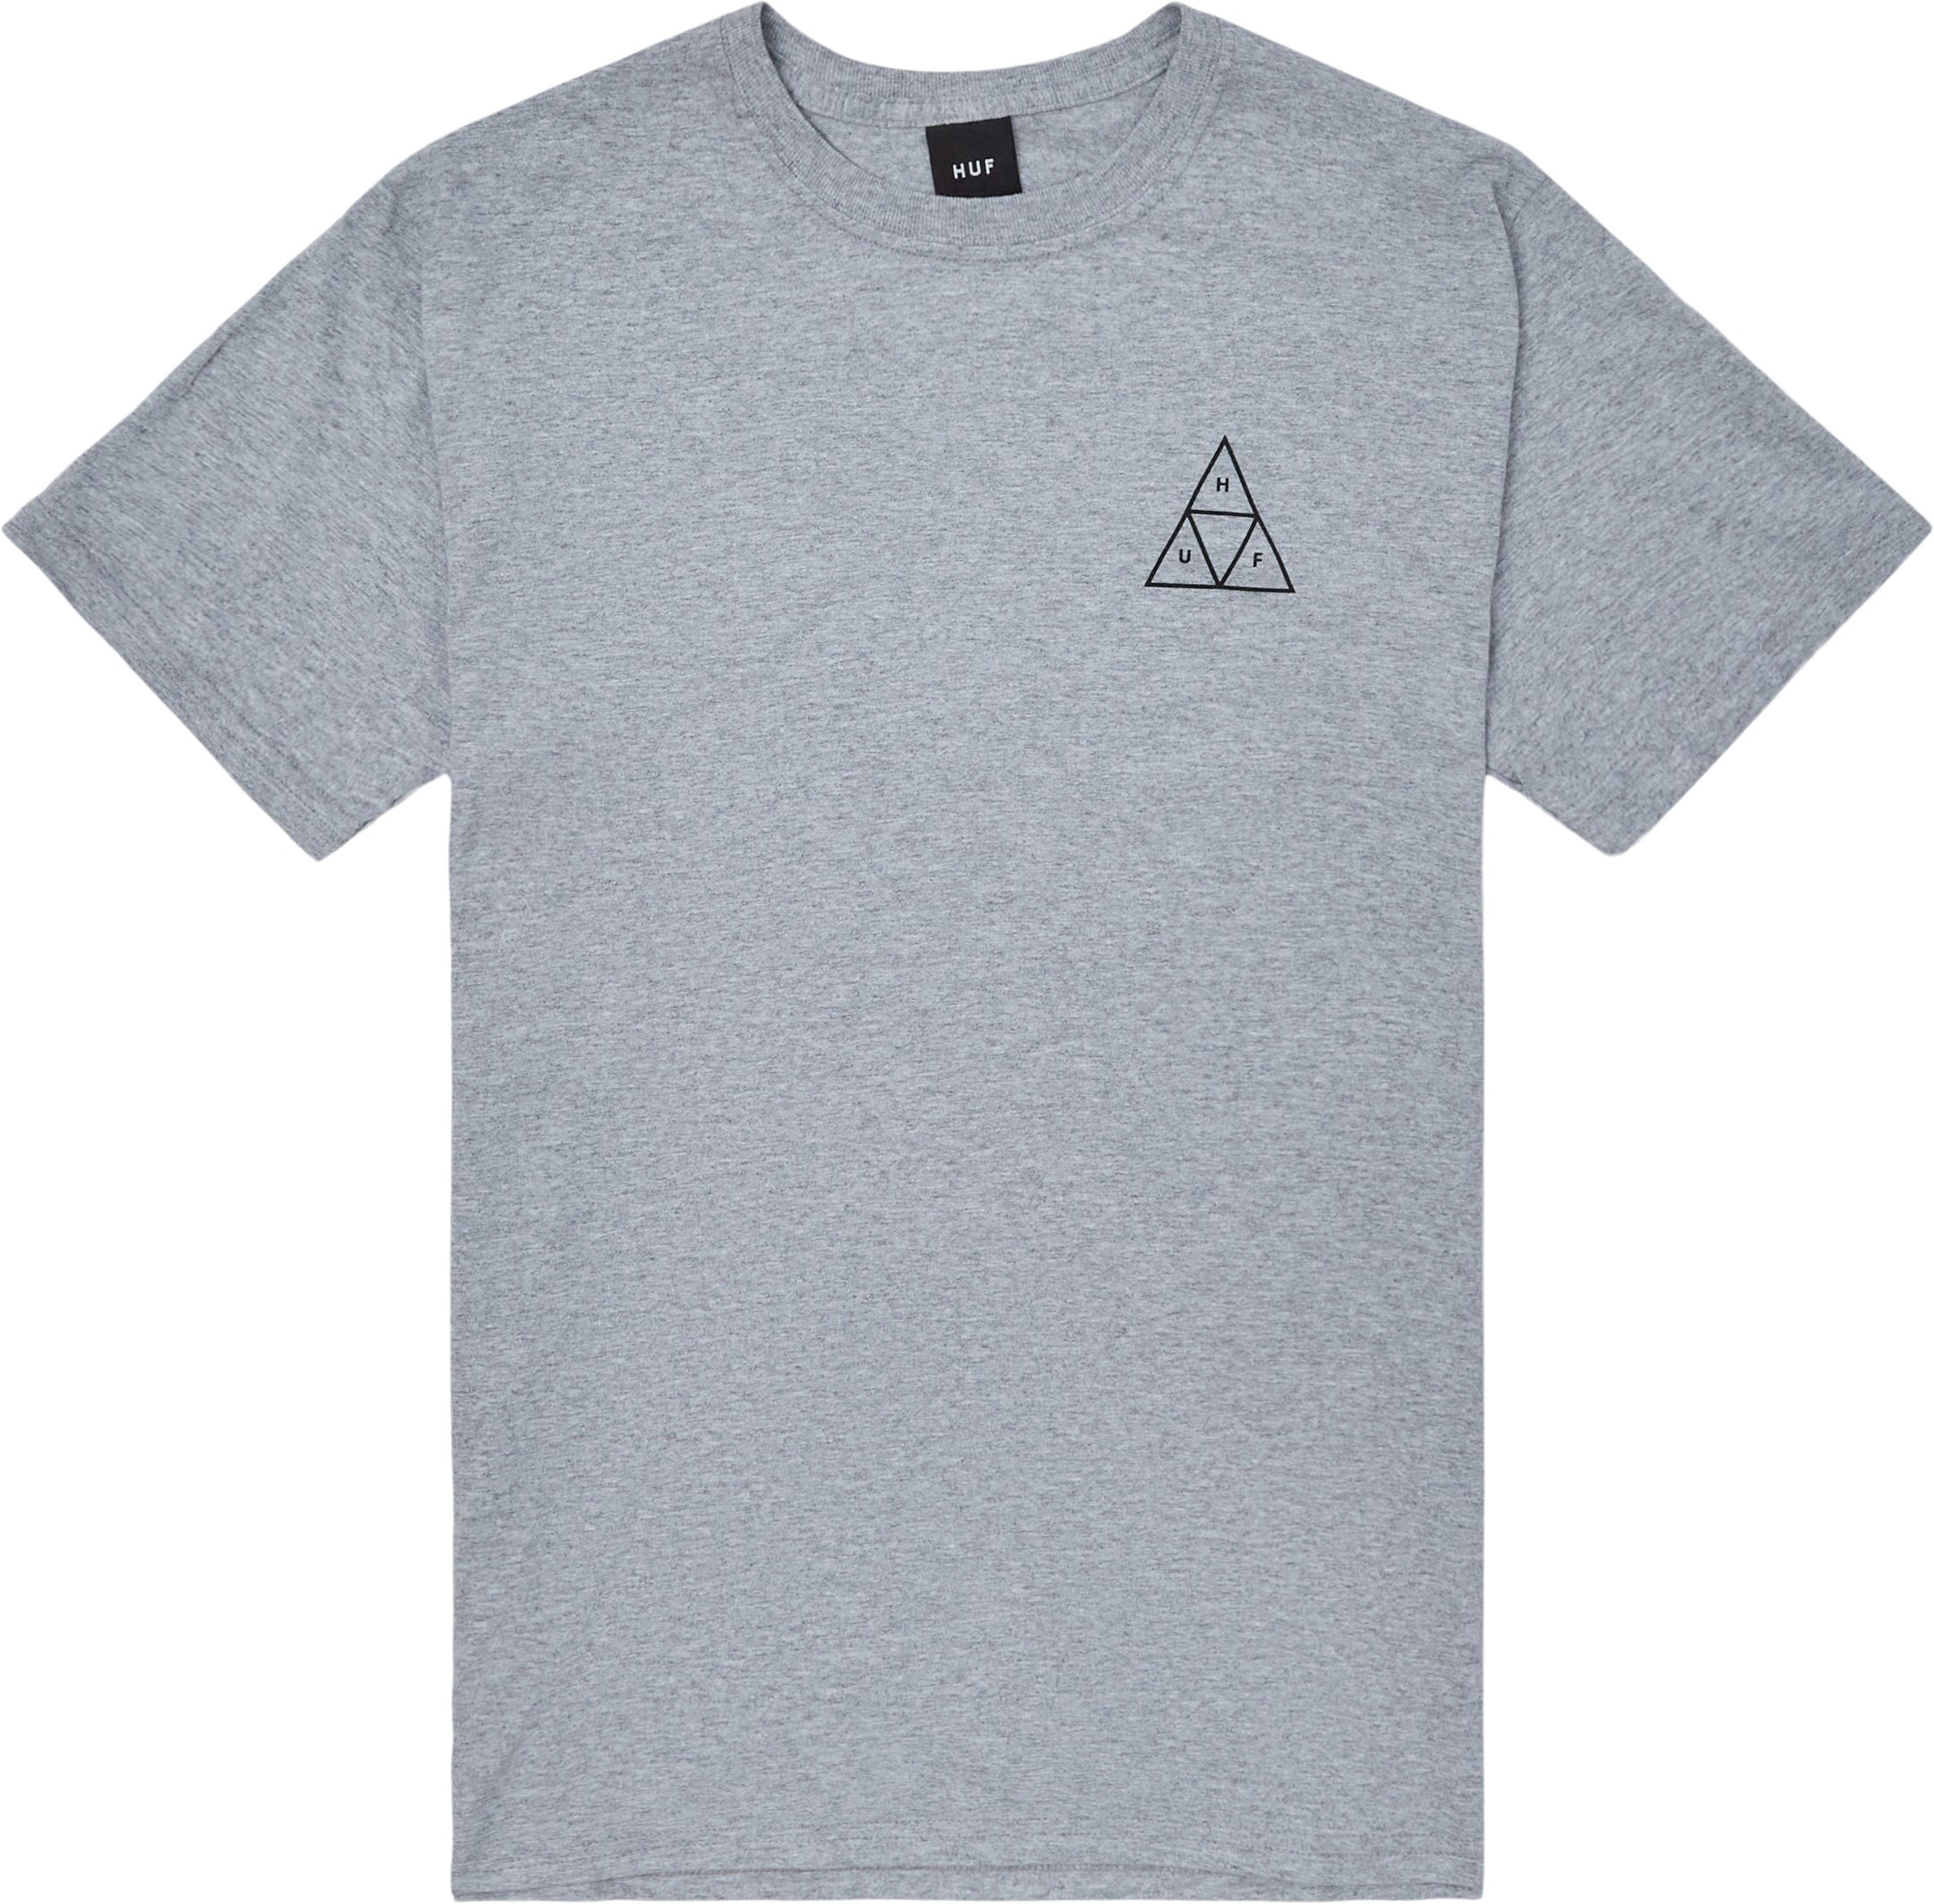 Essentials Tee - T-shirts - Regular fit - Grey